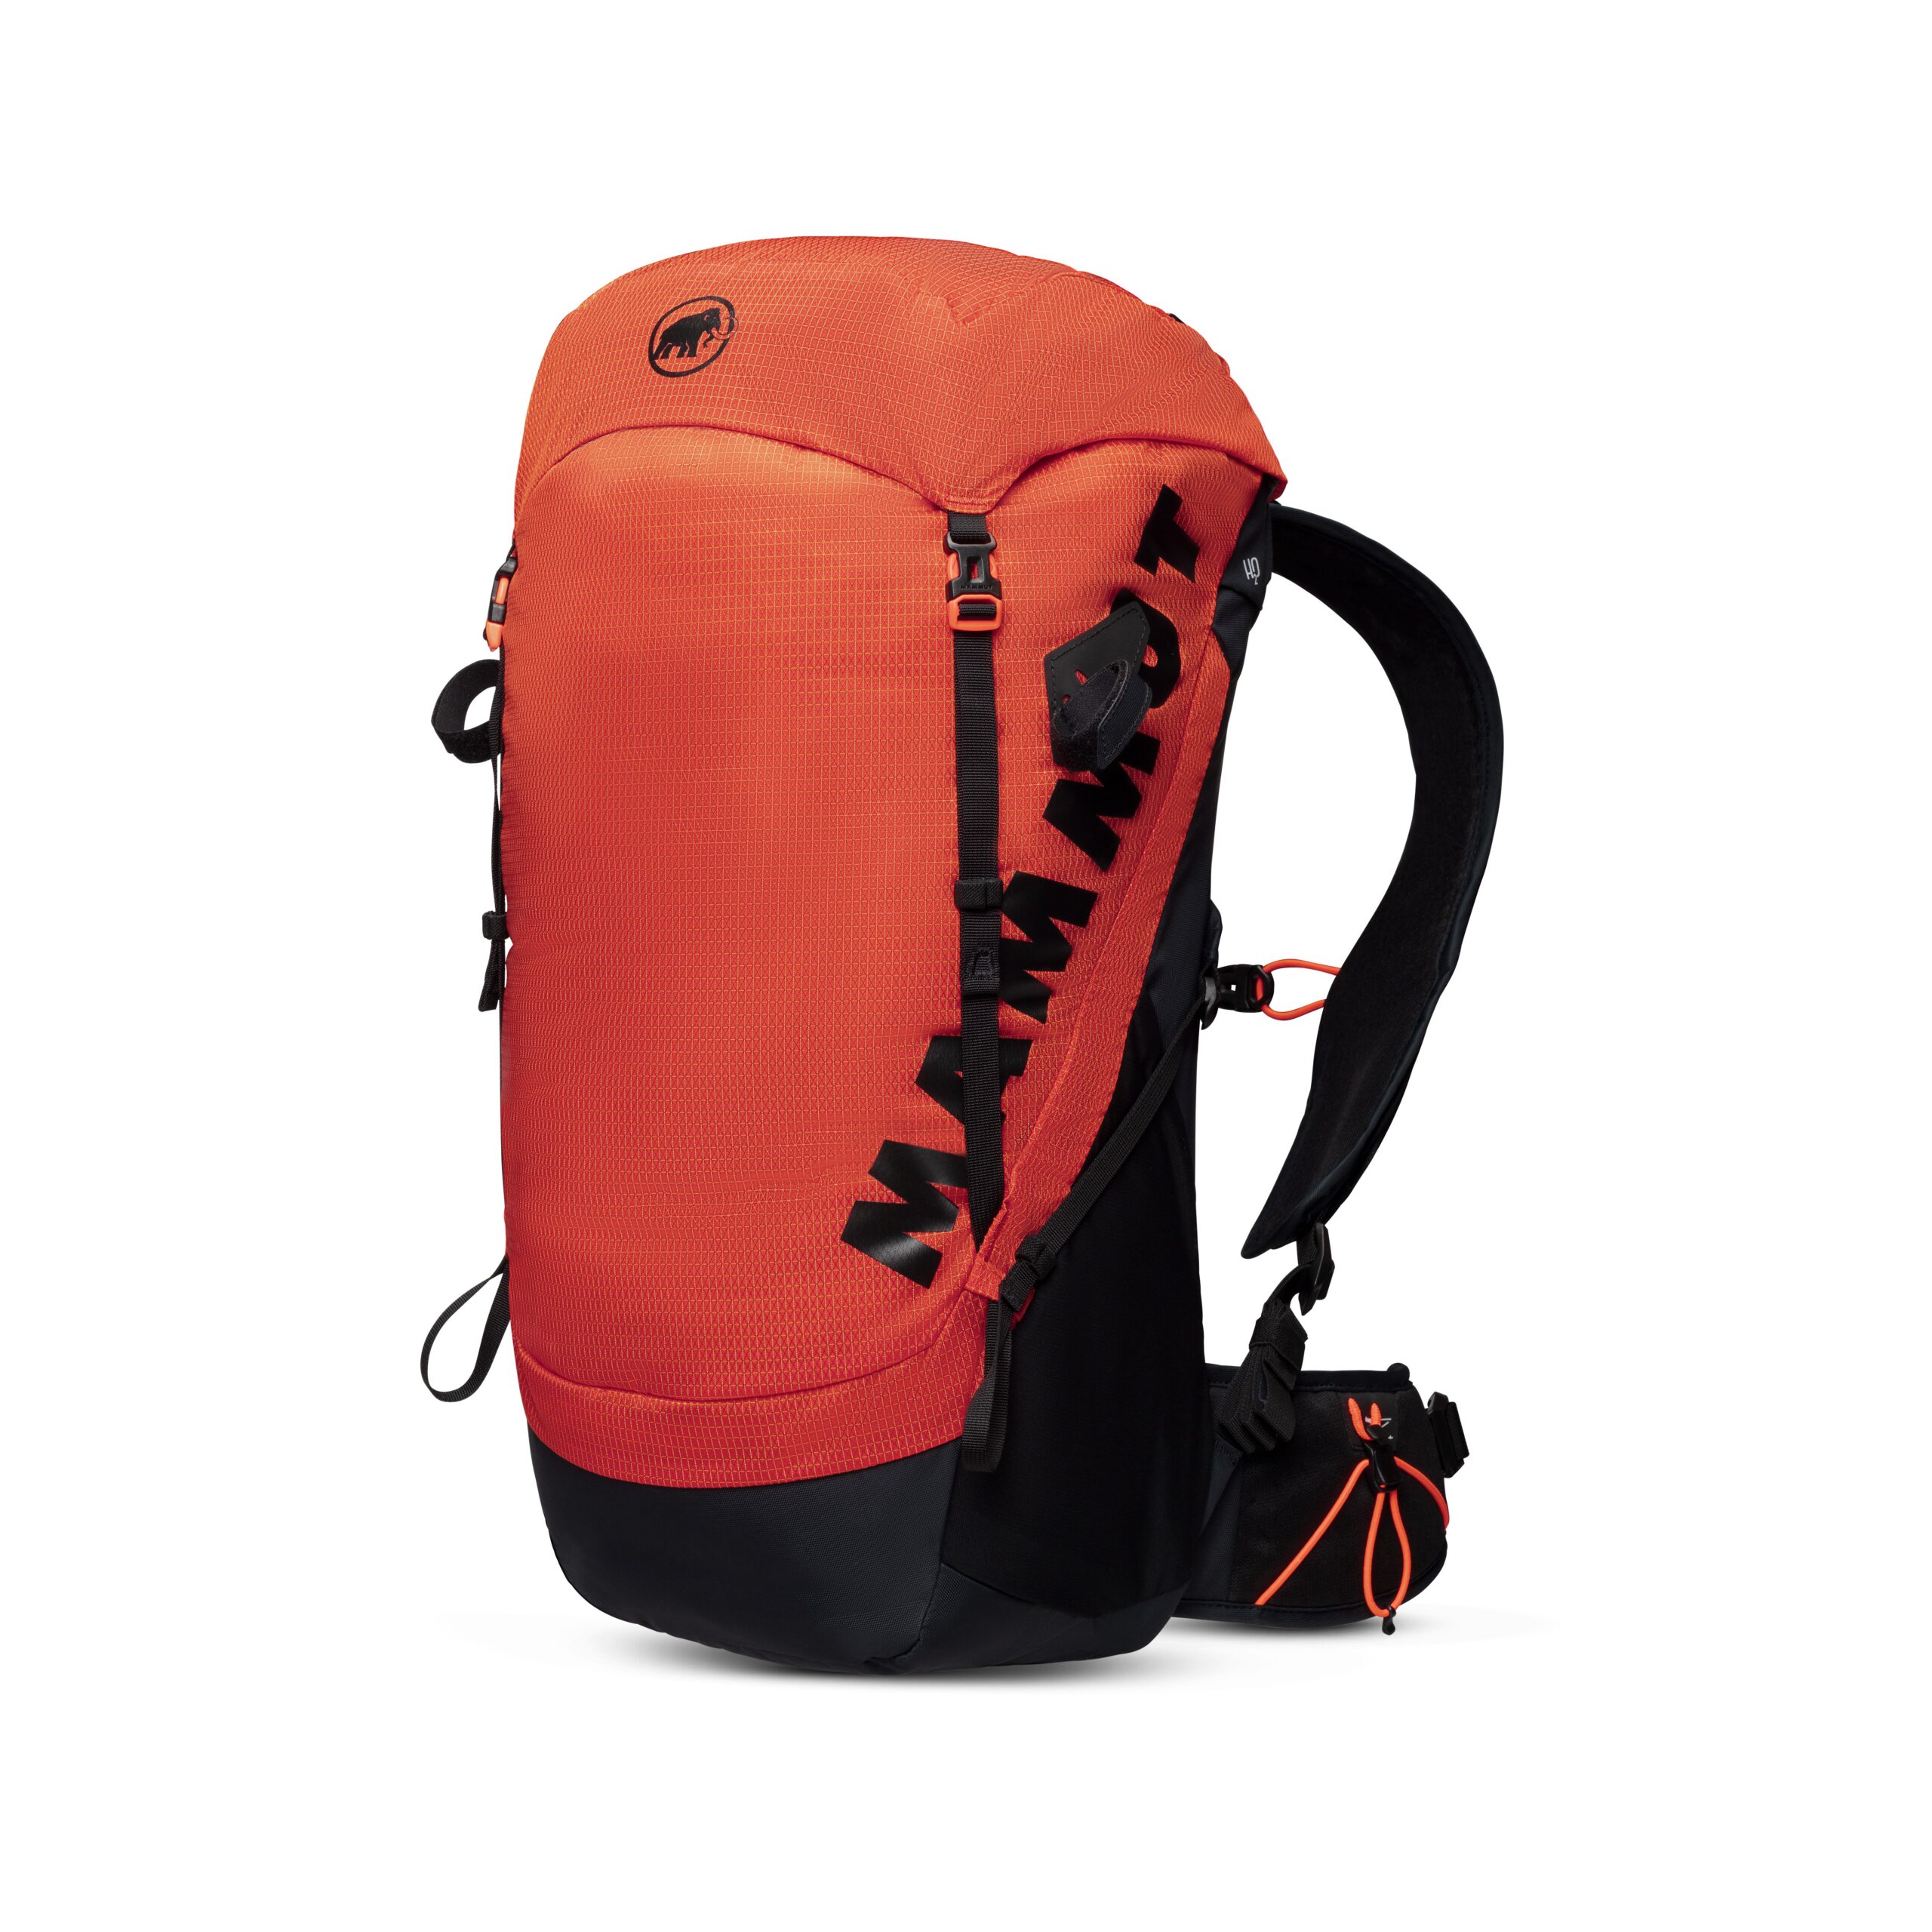 Mammut Ducan 24L Backpack - Hot Red/Black - Aspire Adventure Equipment